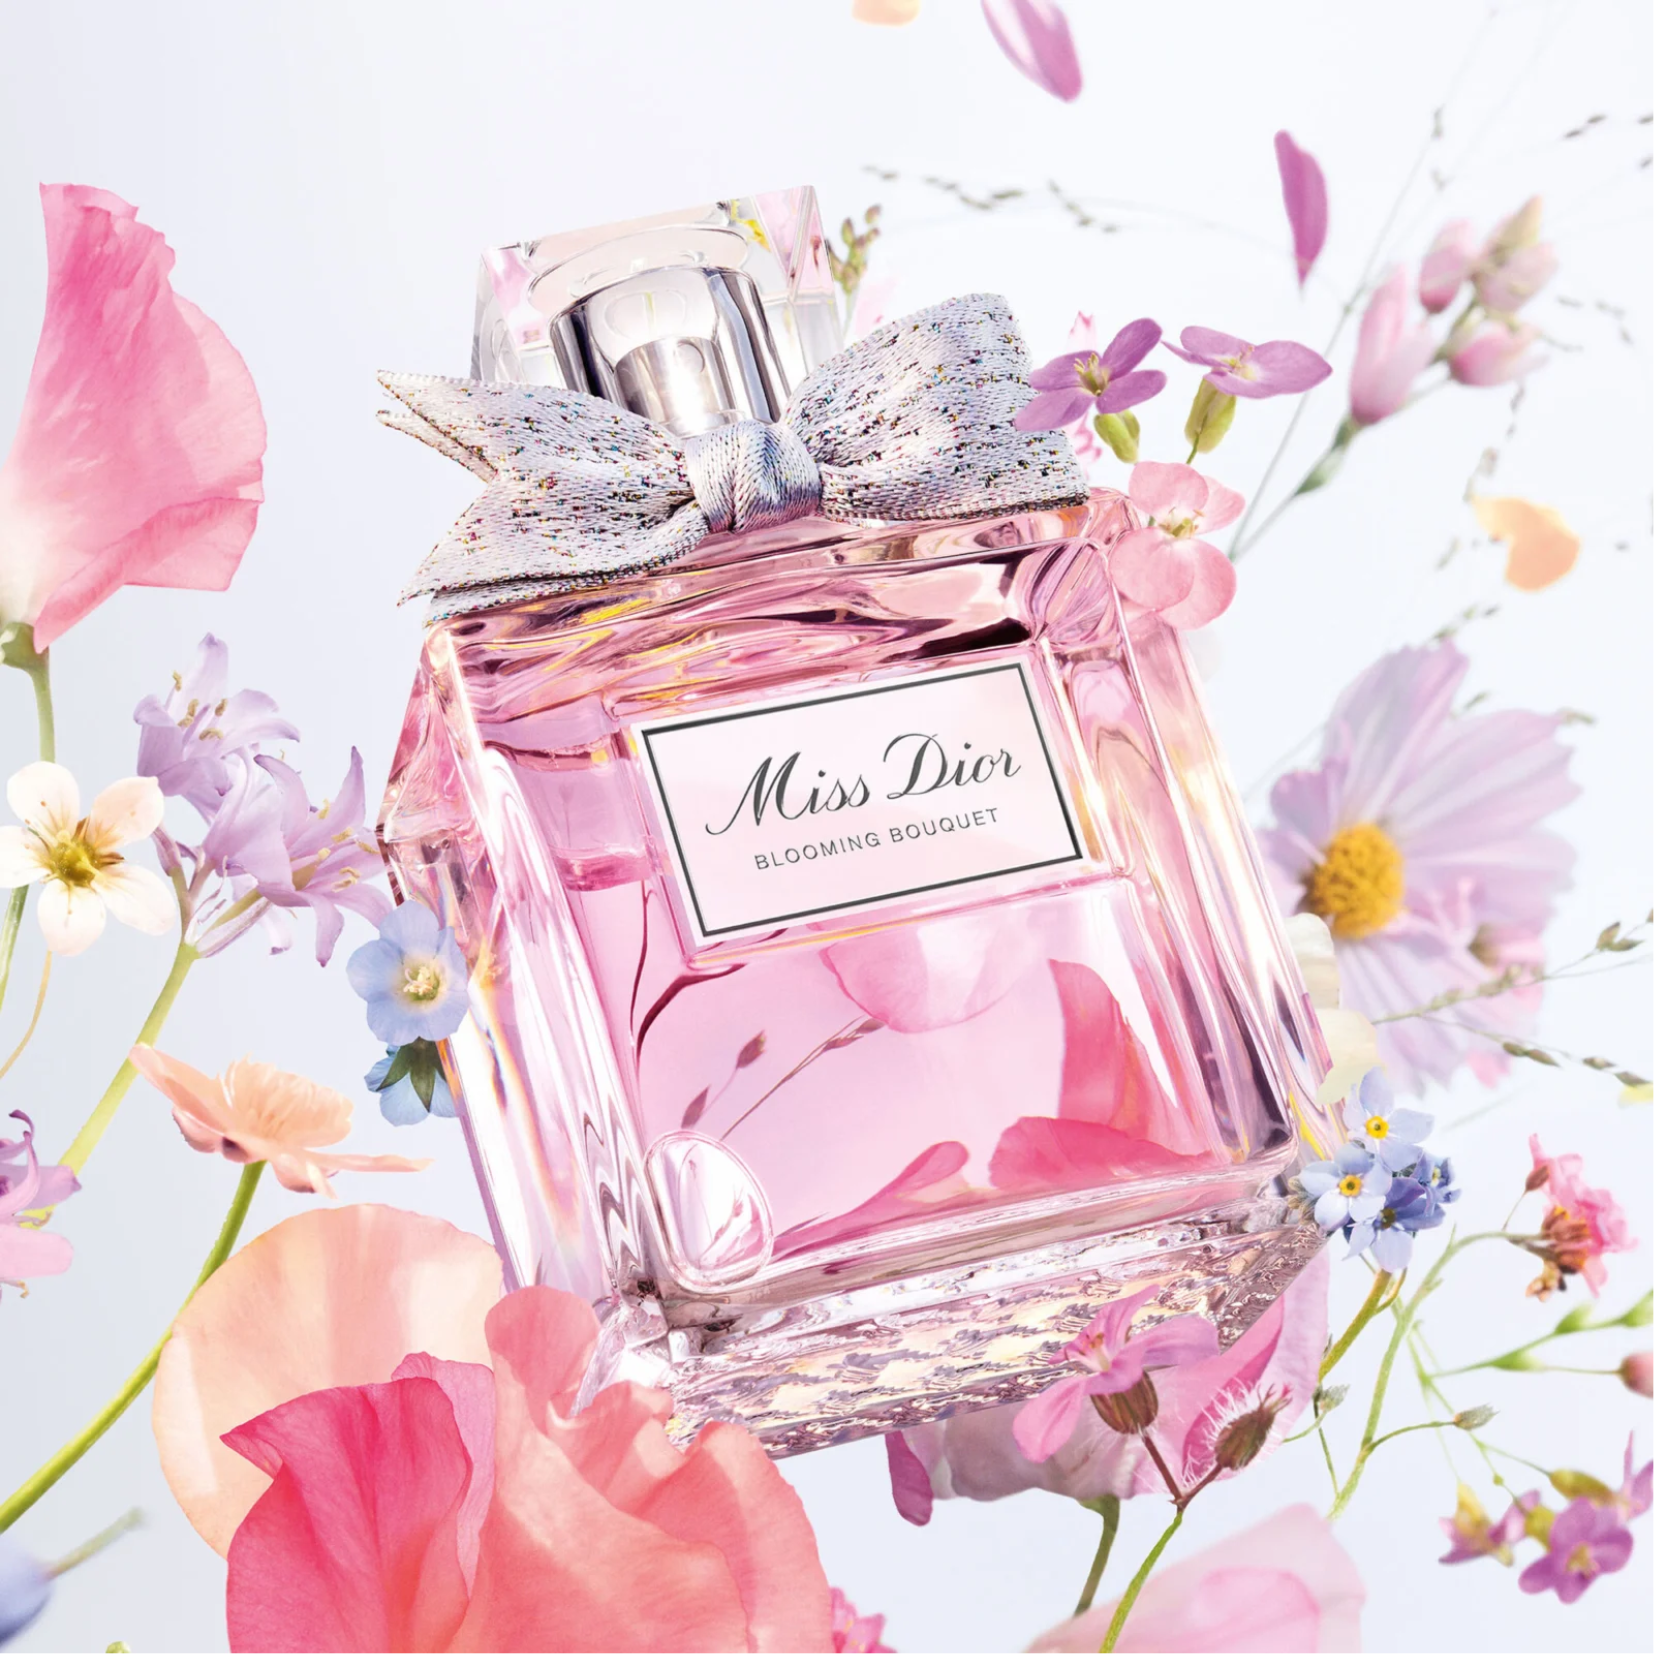 Miss Dior Blooming Bouquet by Christian Dior Eau De Toilette Spray 1 oz